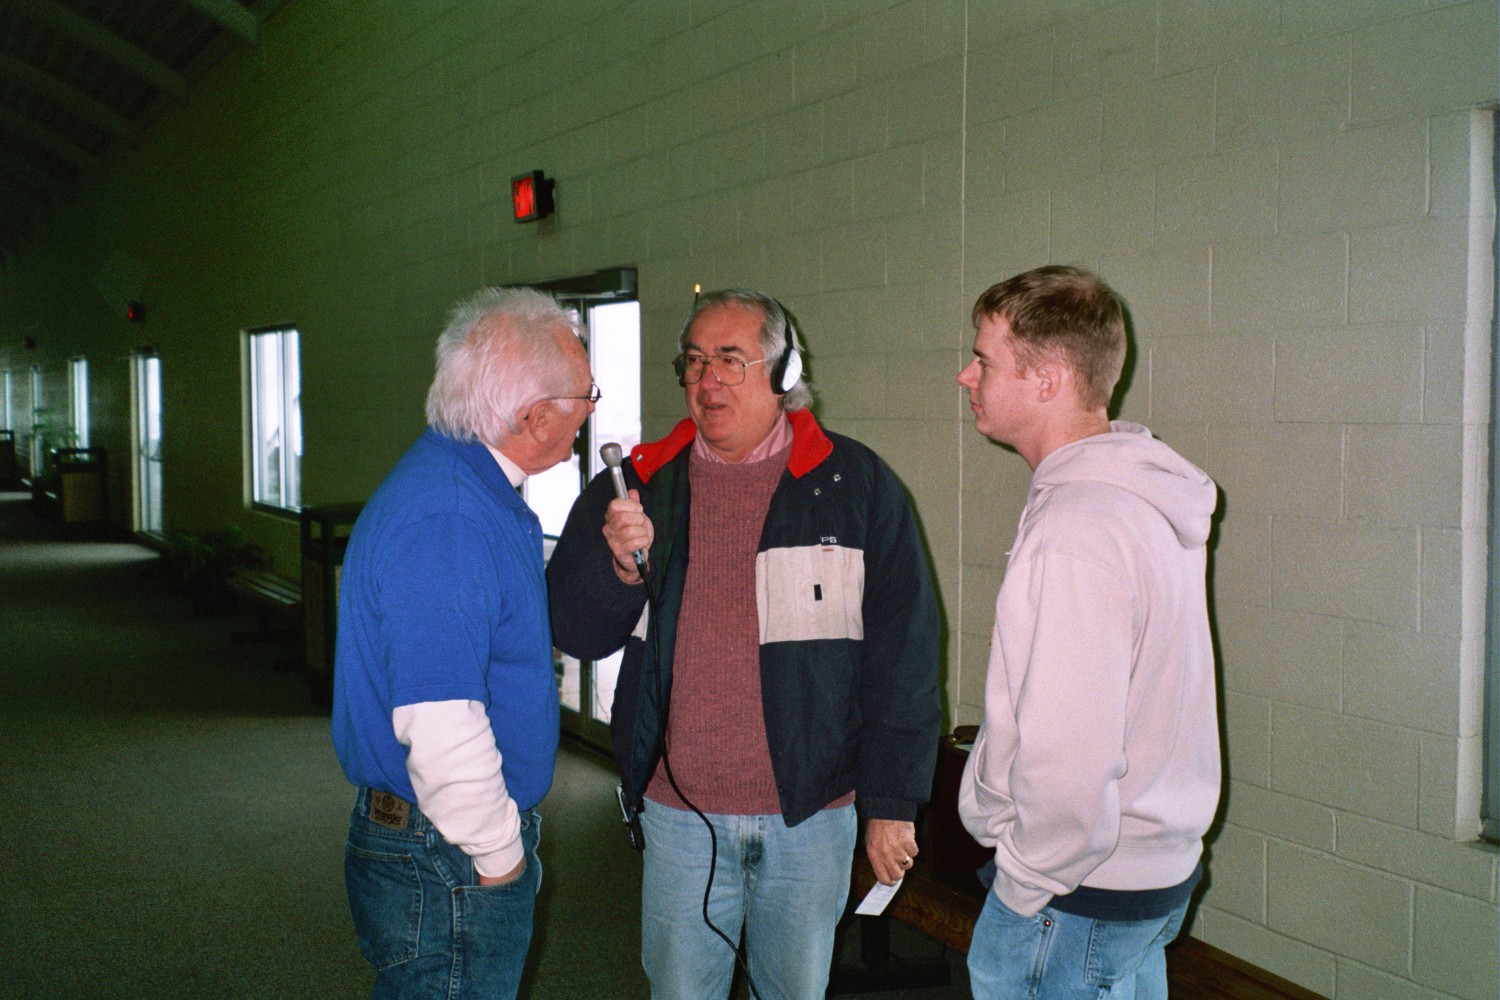 Smokey Snellbaker & Brian Leppo
Interviews at Dirt Trackin' 2005
